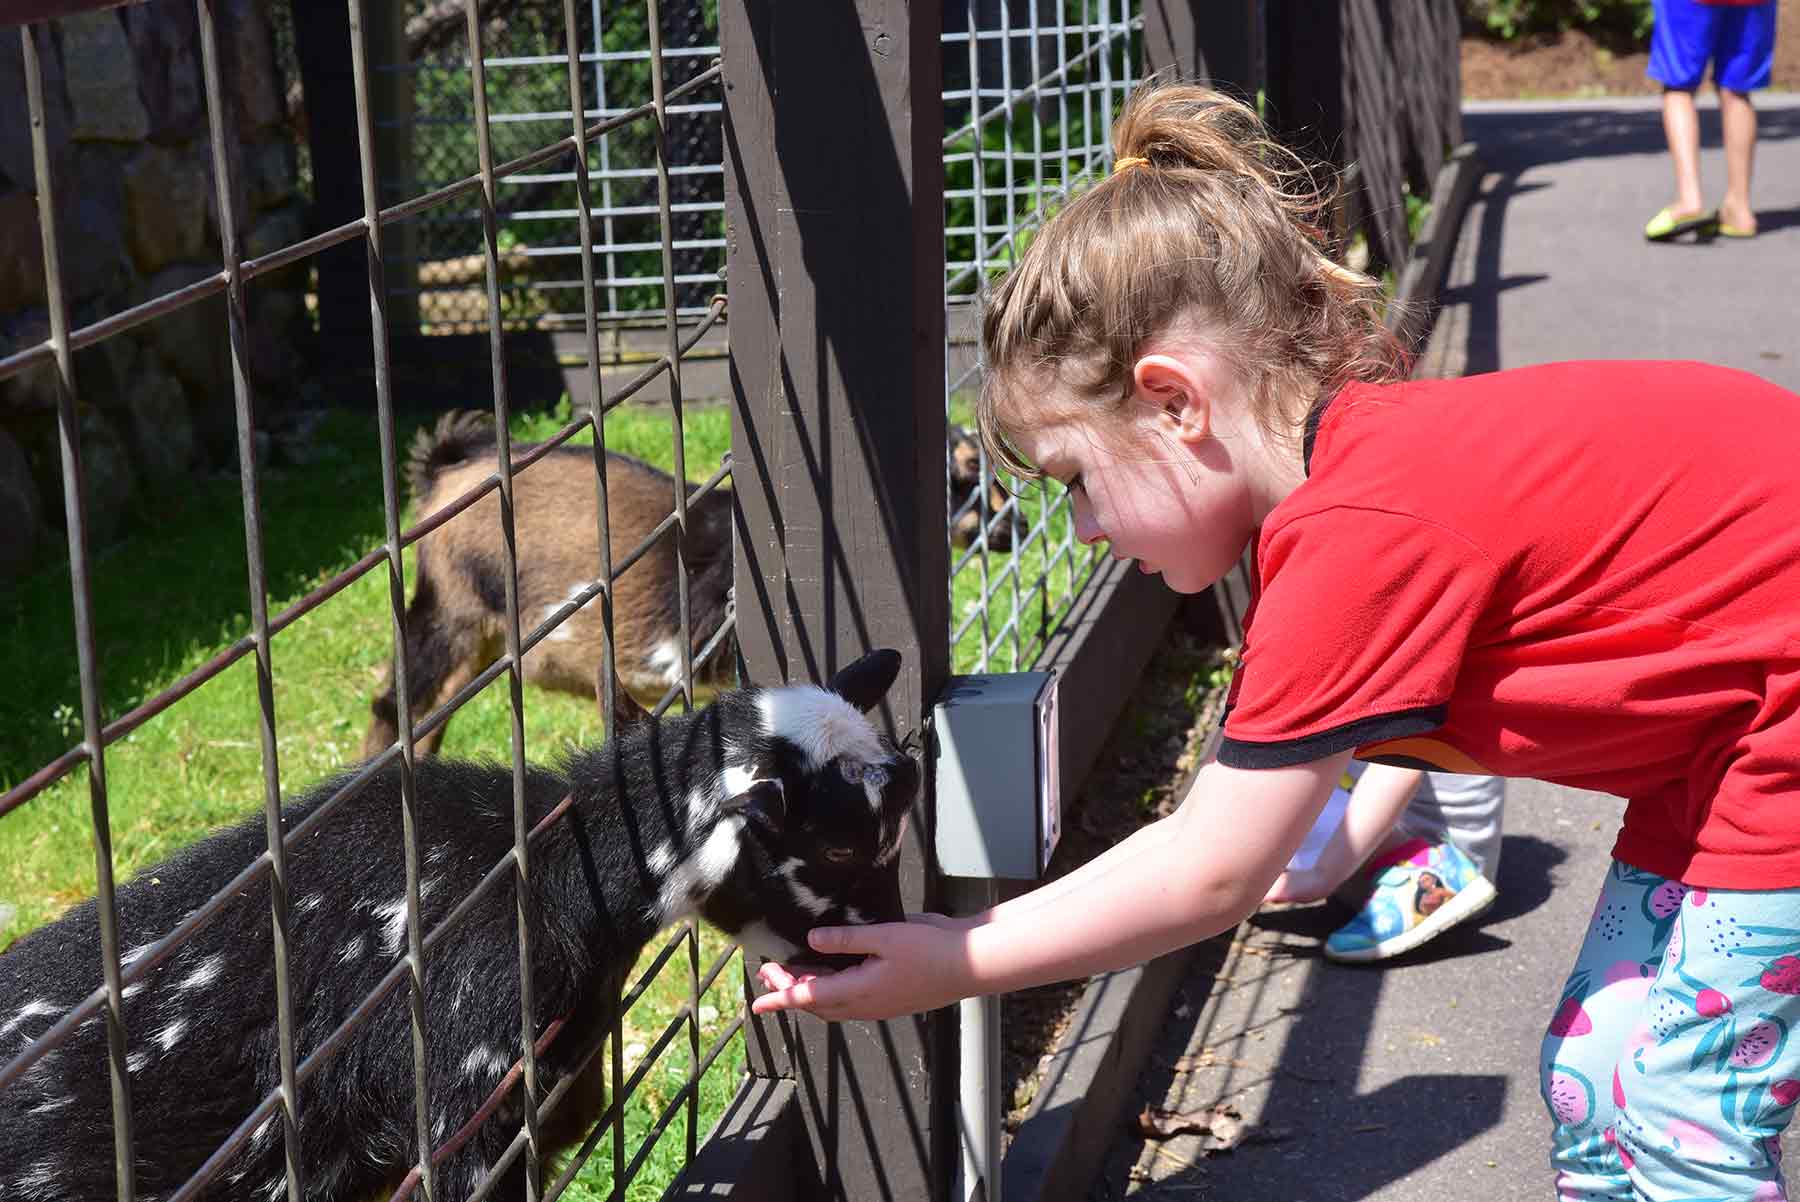 Girl Petting Goat At Zoo